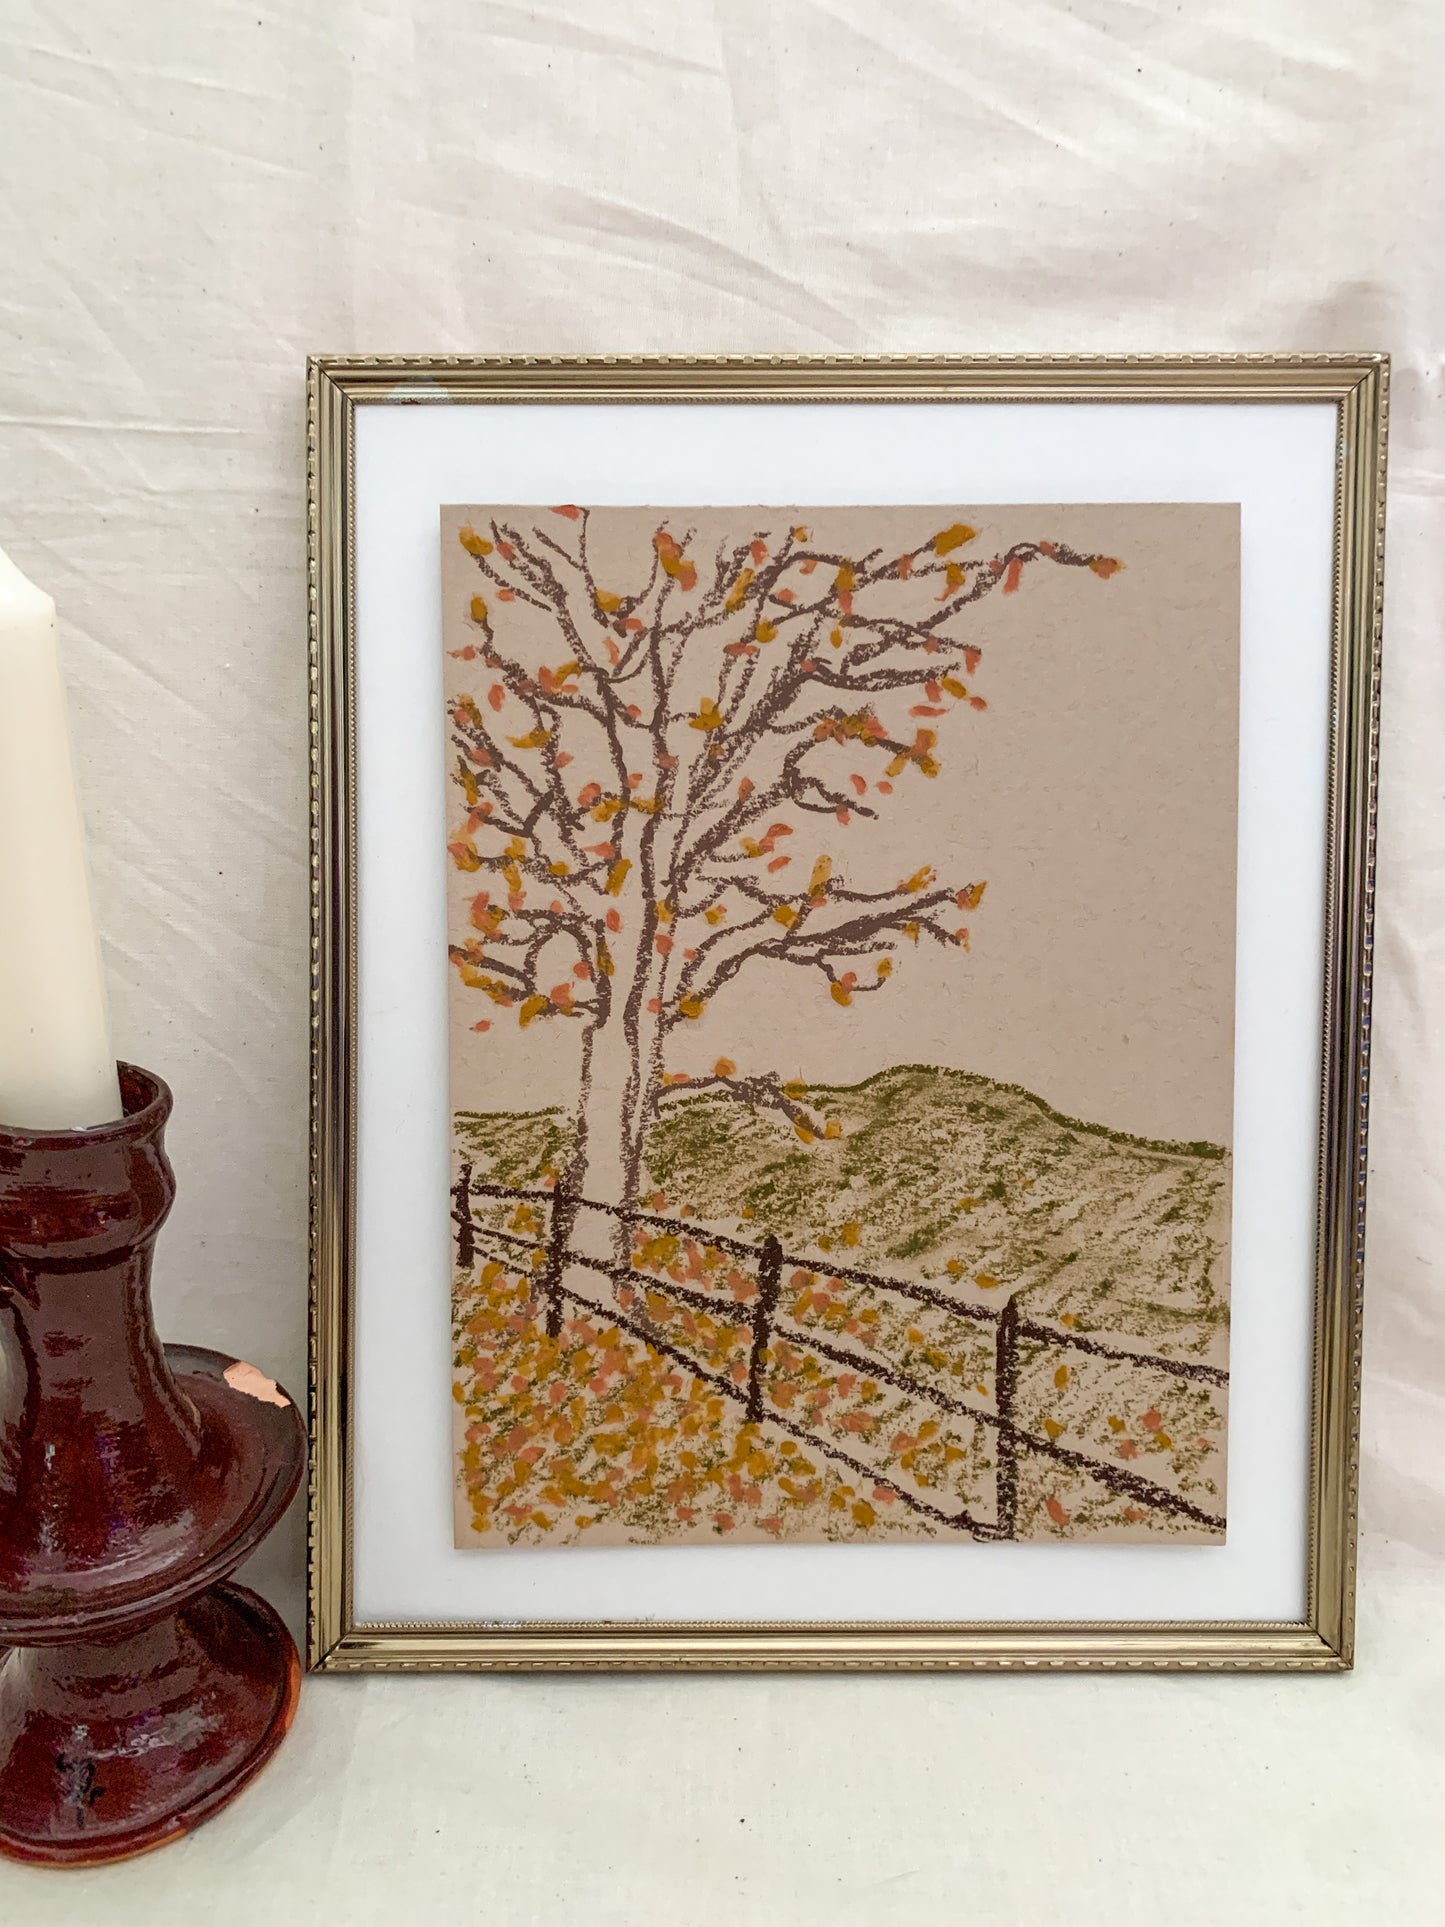 "Kentucky Autumn" - An original 6x8in Oil Pastel Drawing